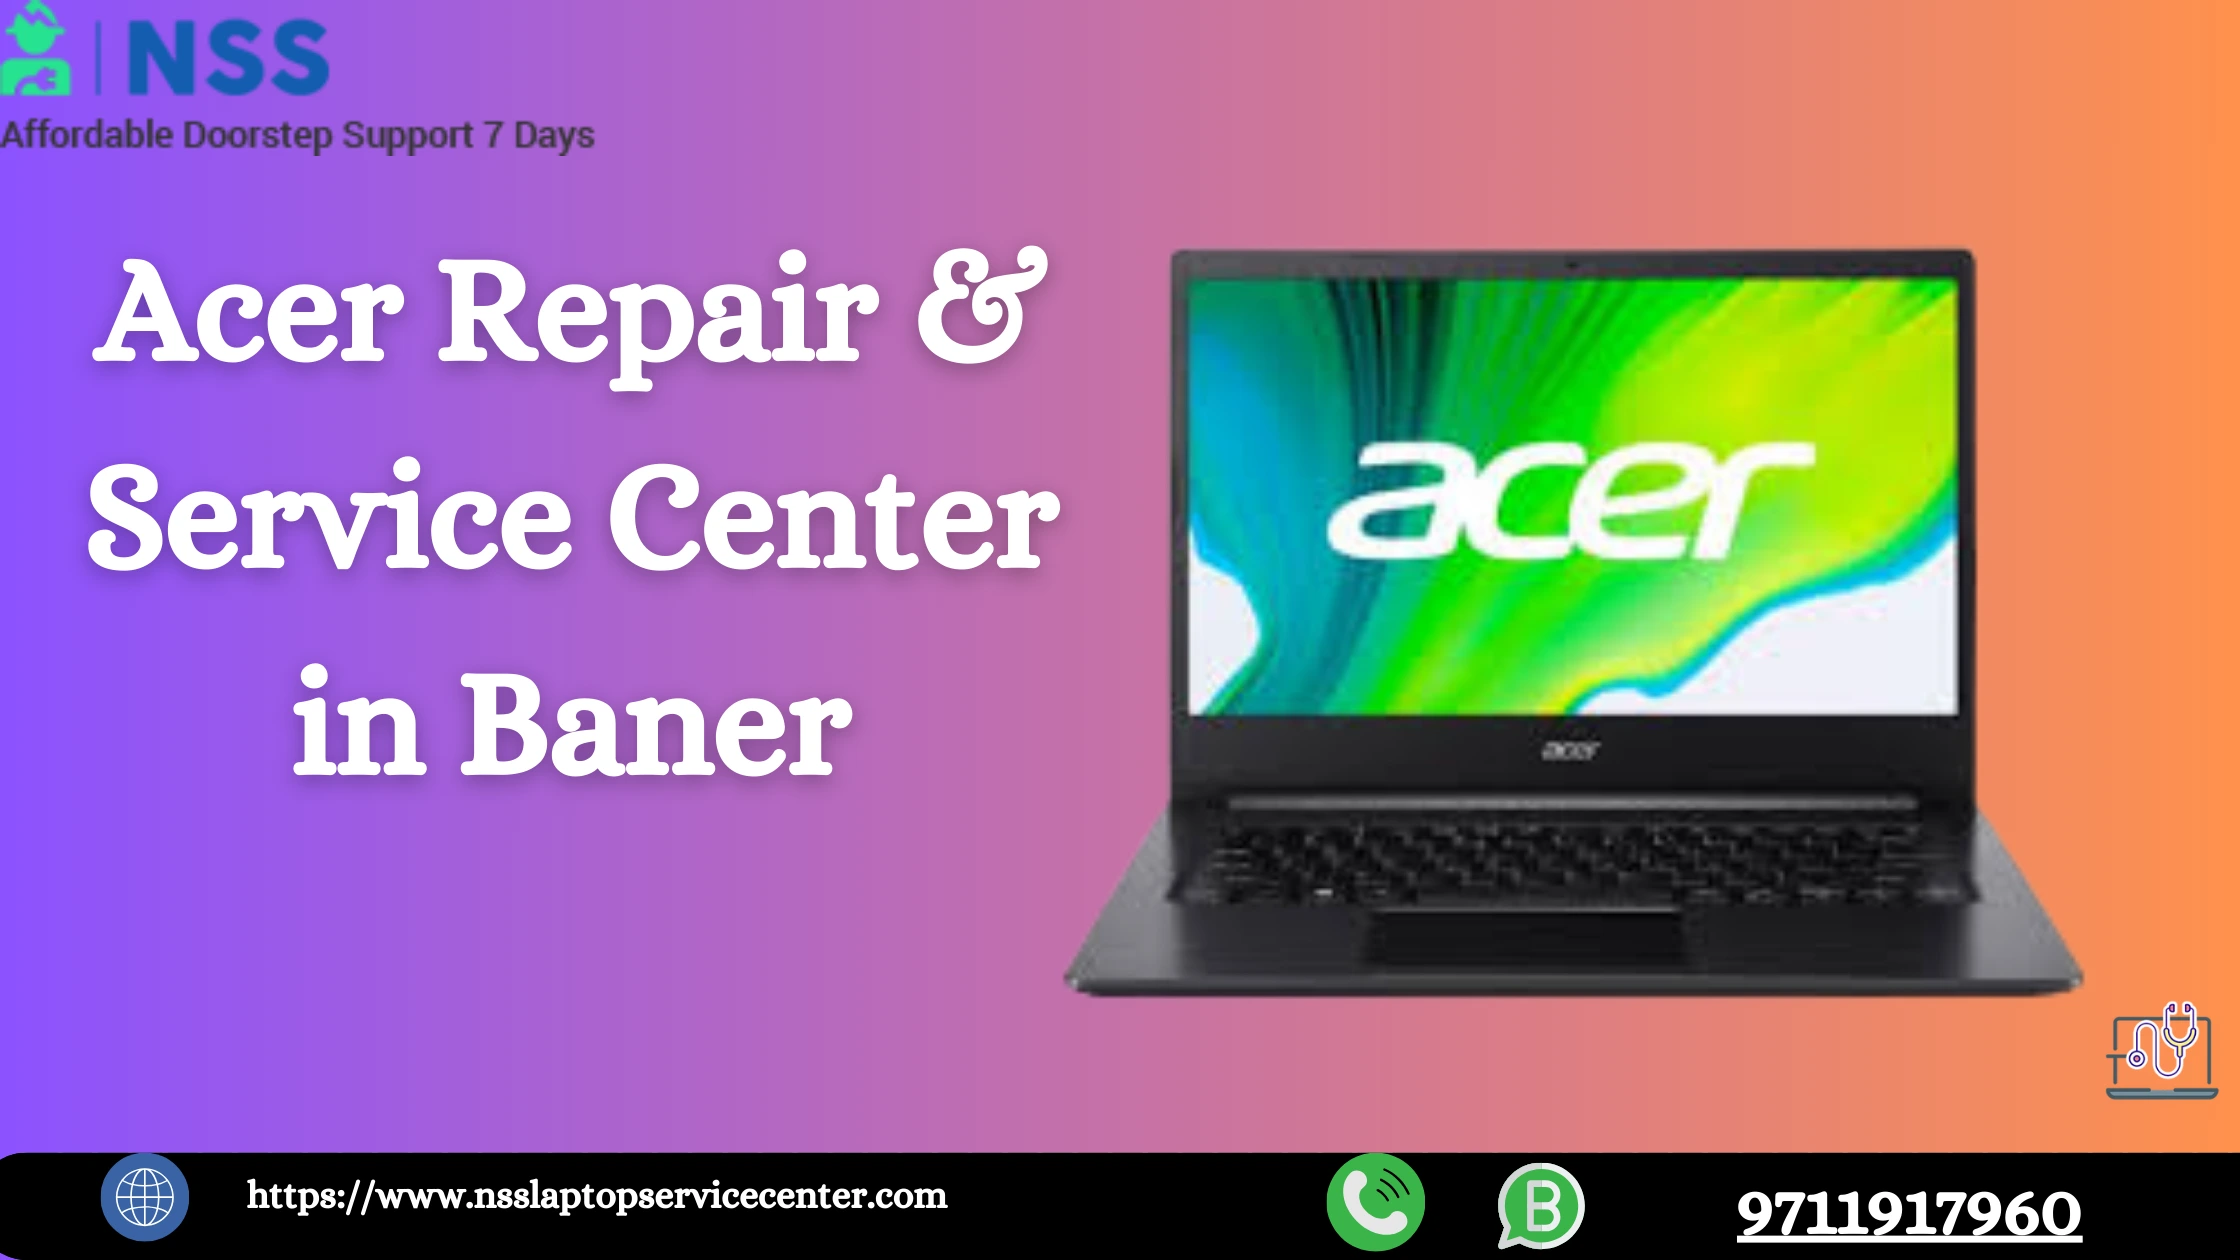 Acer Repair & Service Center in Baner, Pune